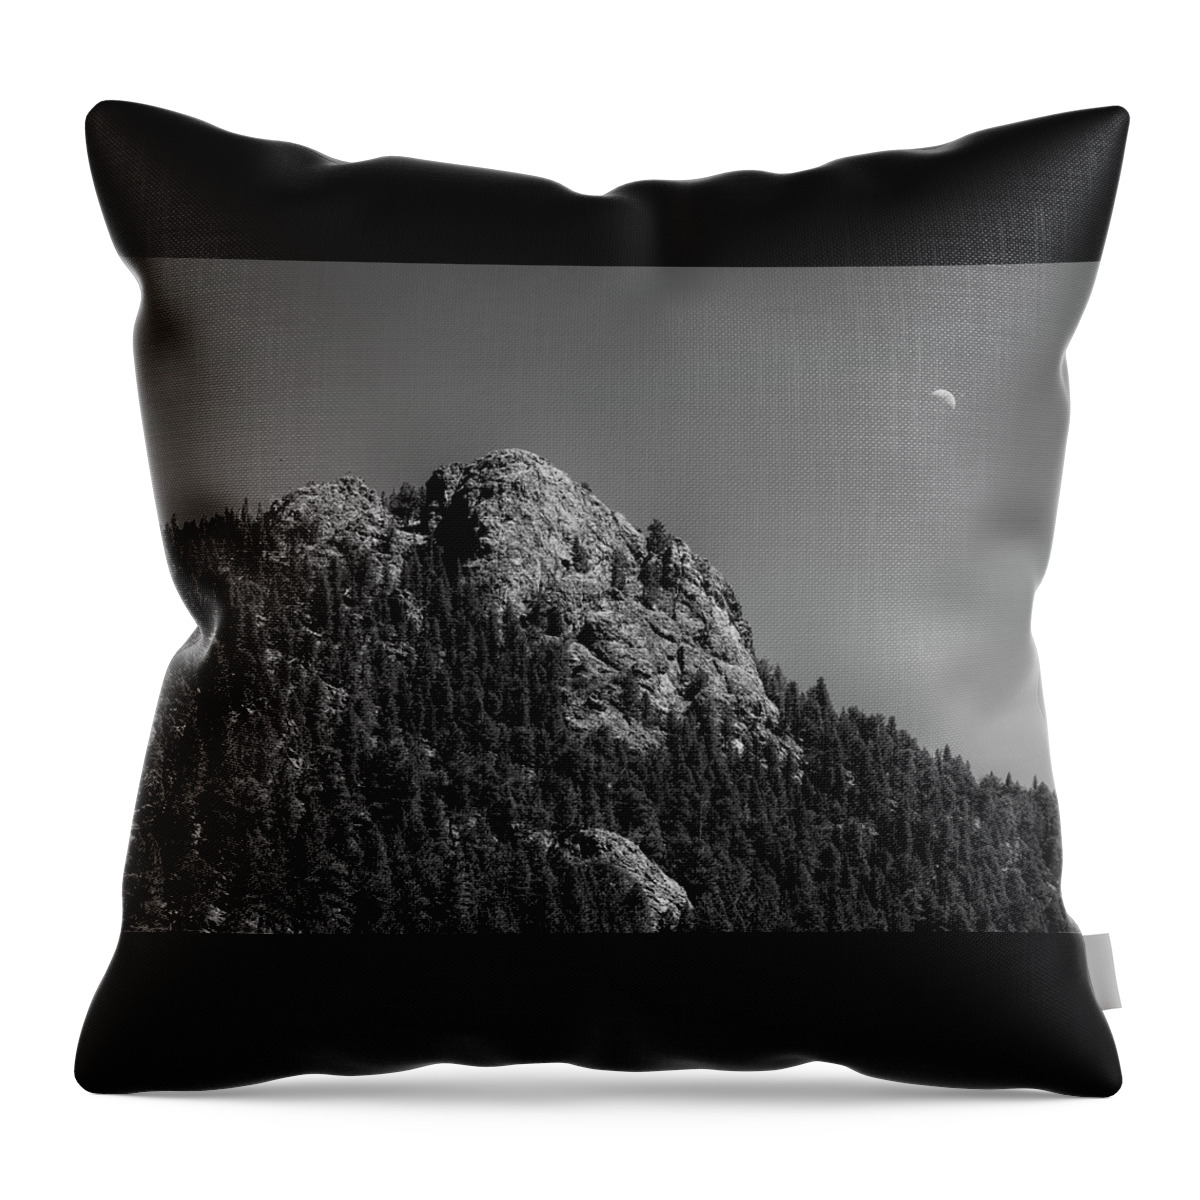 Buffalo Rock Throw Pillow featuring the photograph Crescent Moon and Buffalo Rock by James BO Insogna